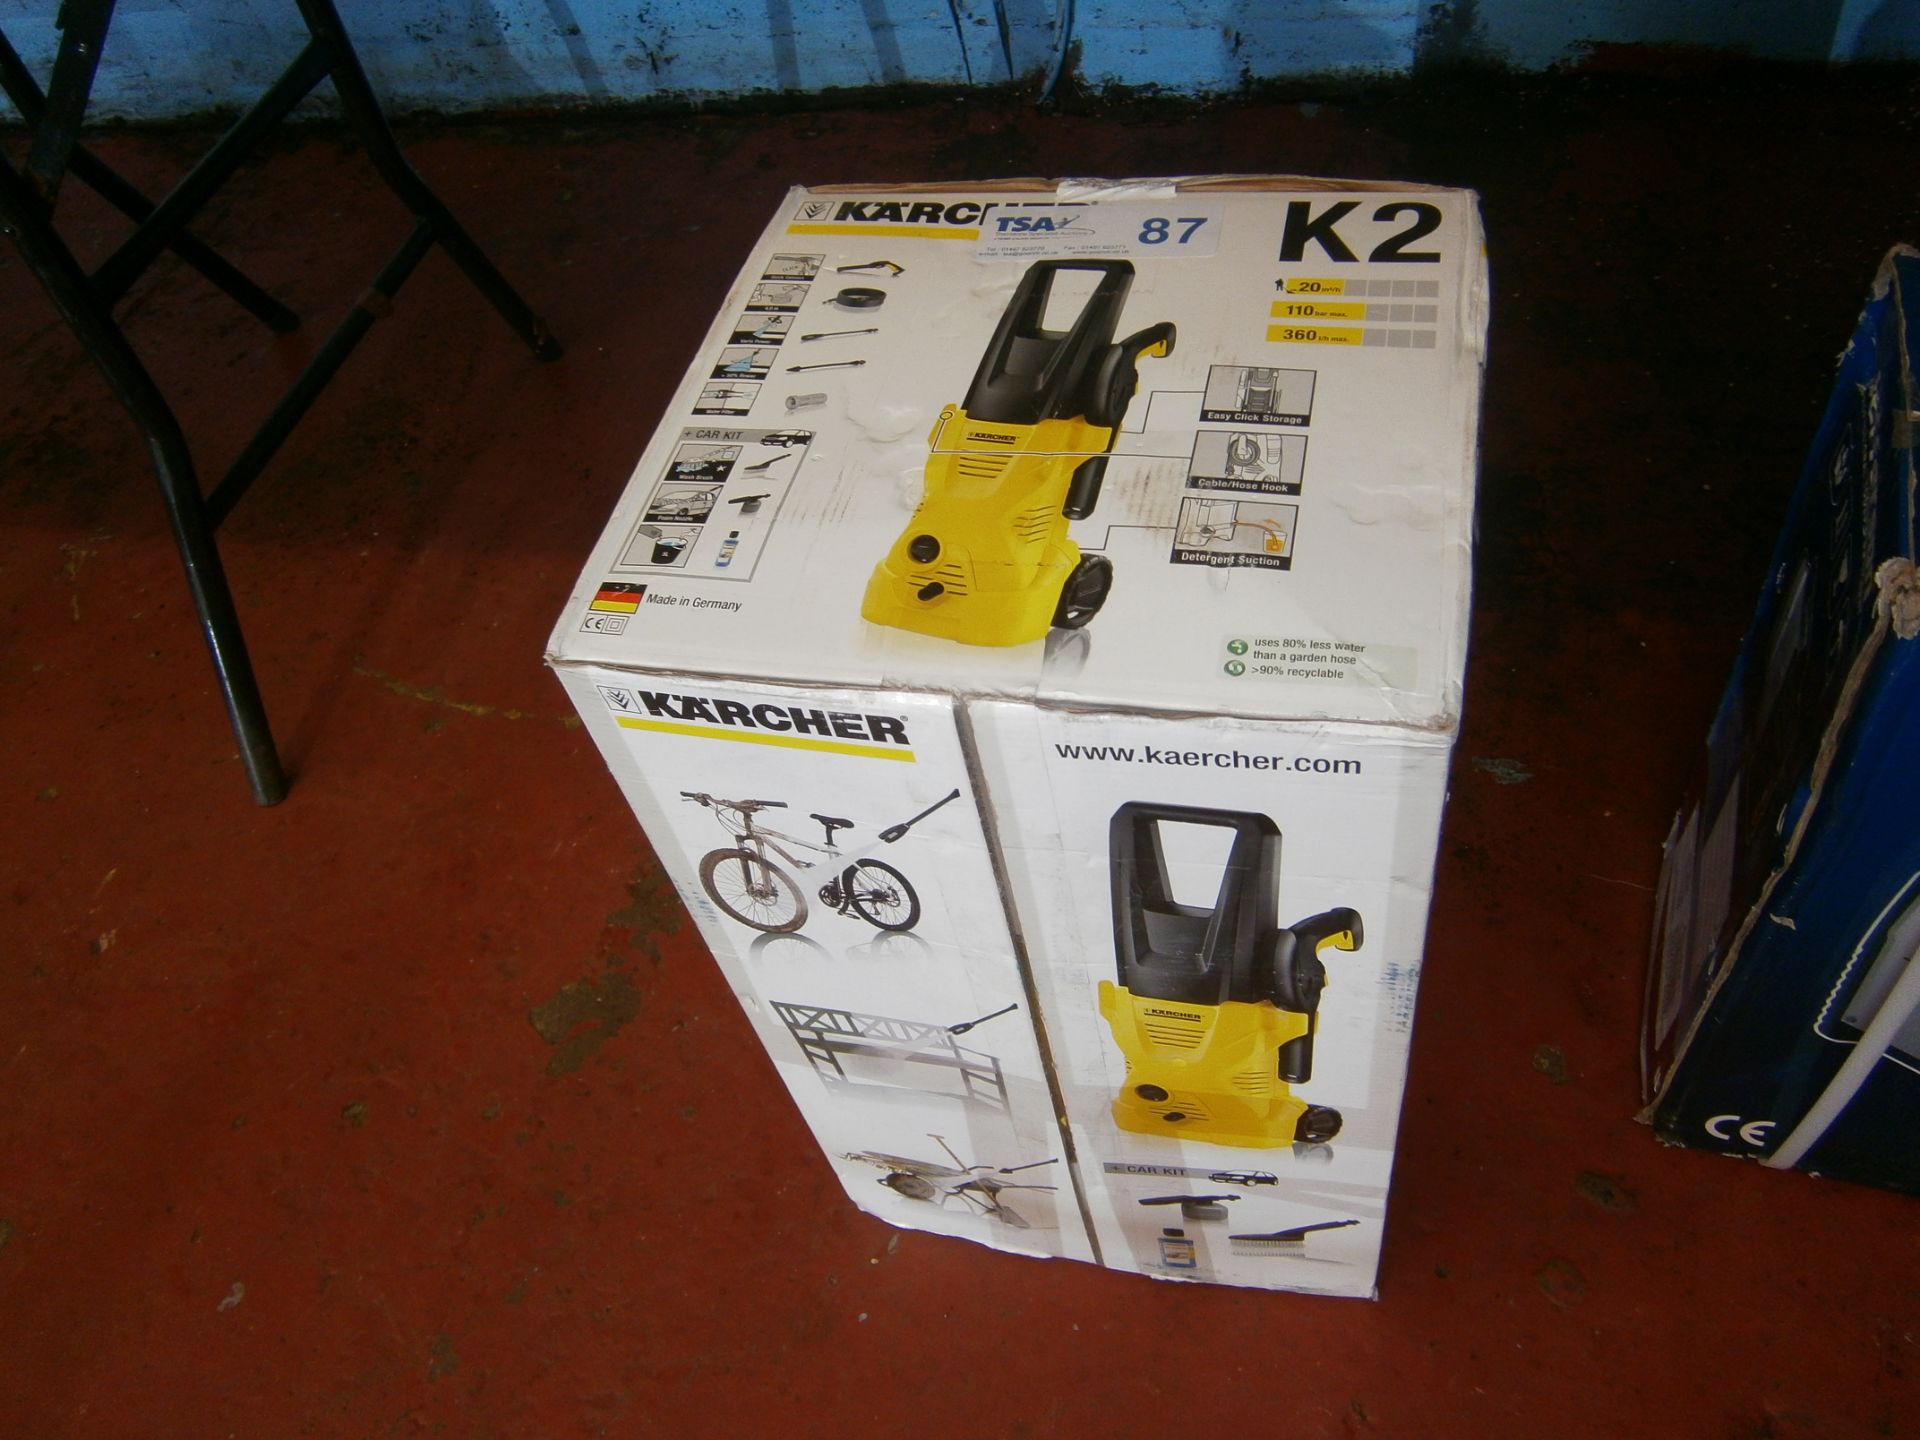 Karcher K2 Pressure Washer